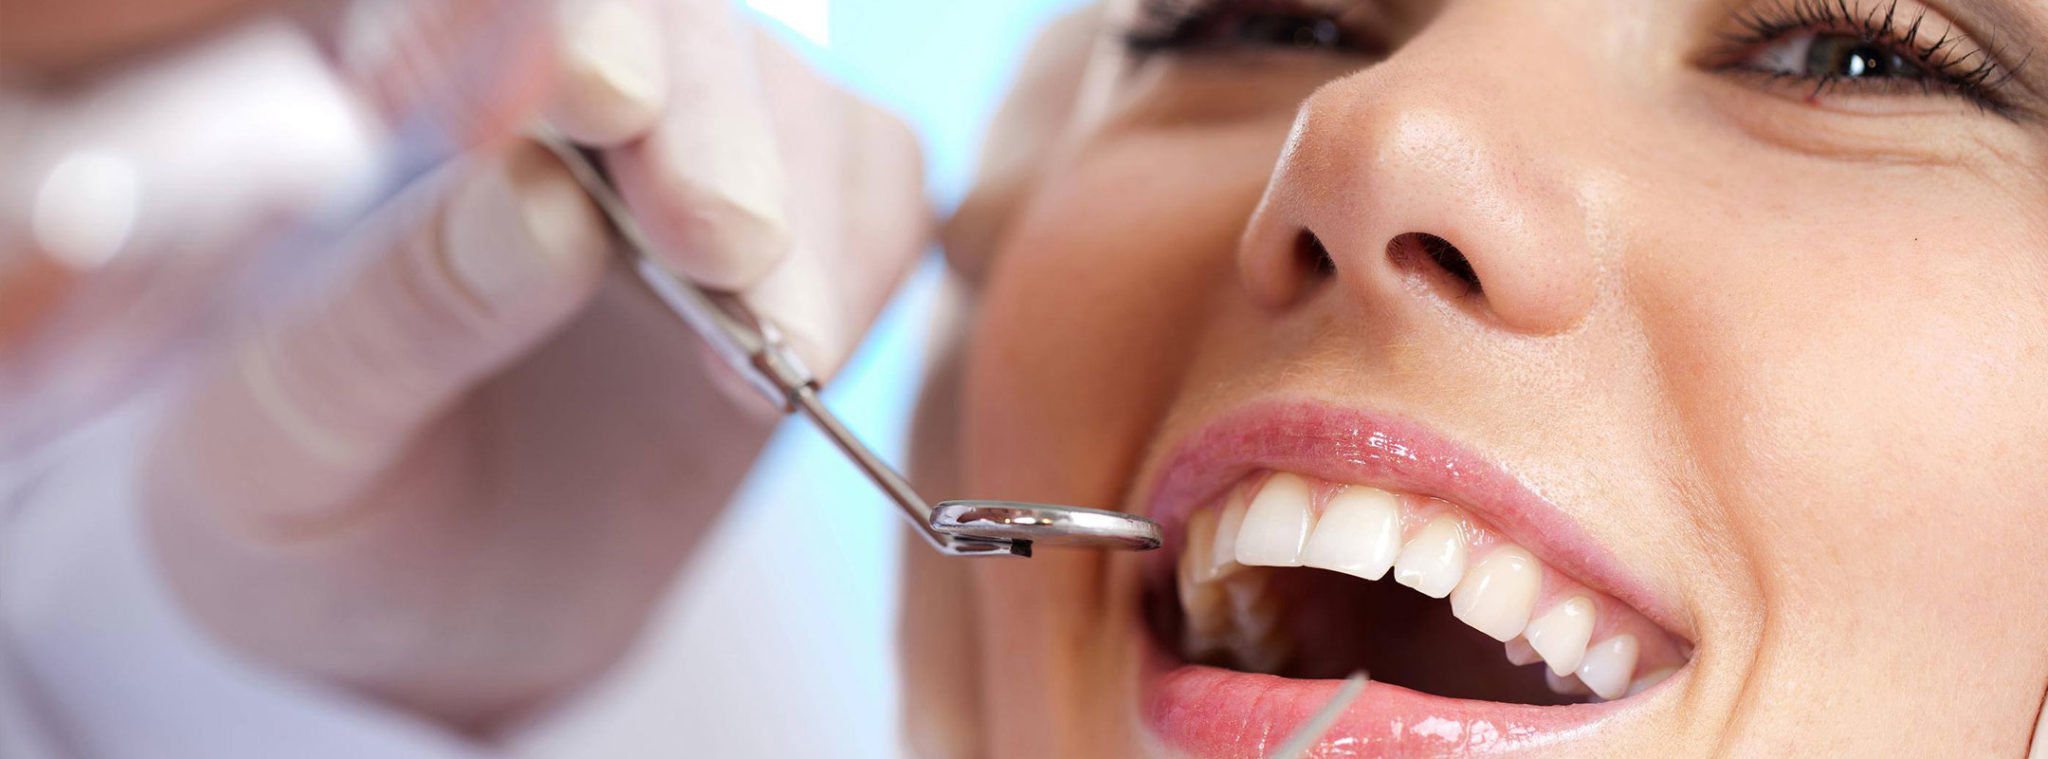 General Dentistry | Gulfshore Dental